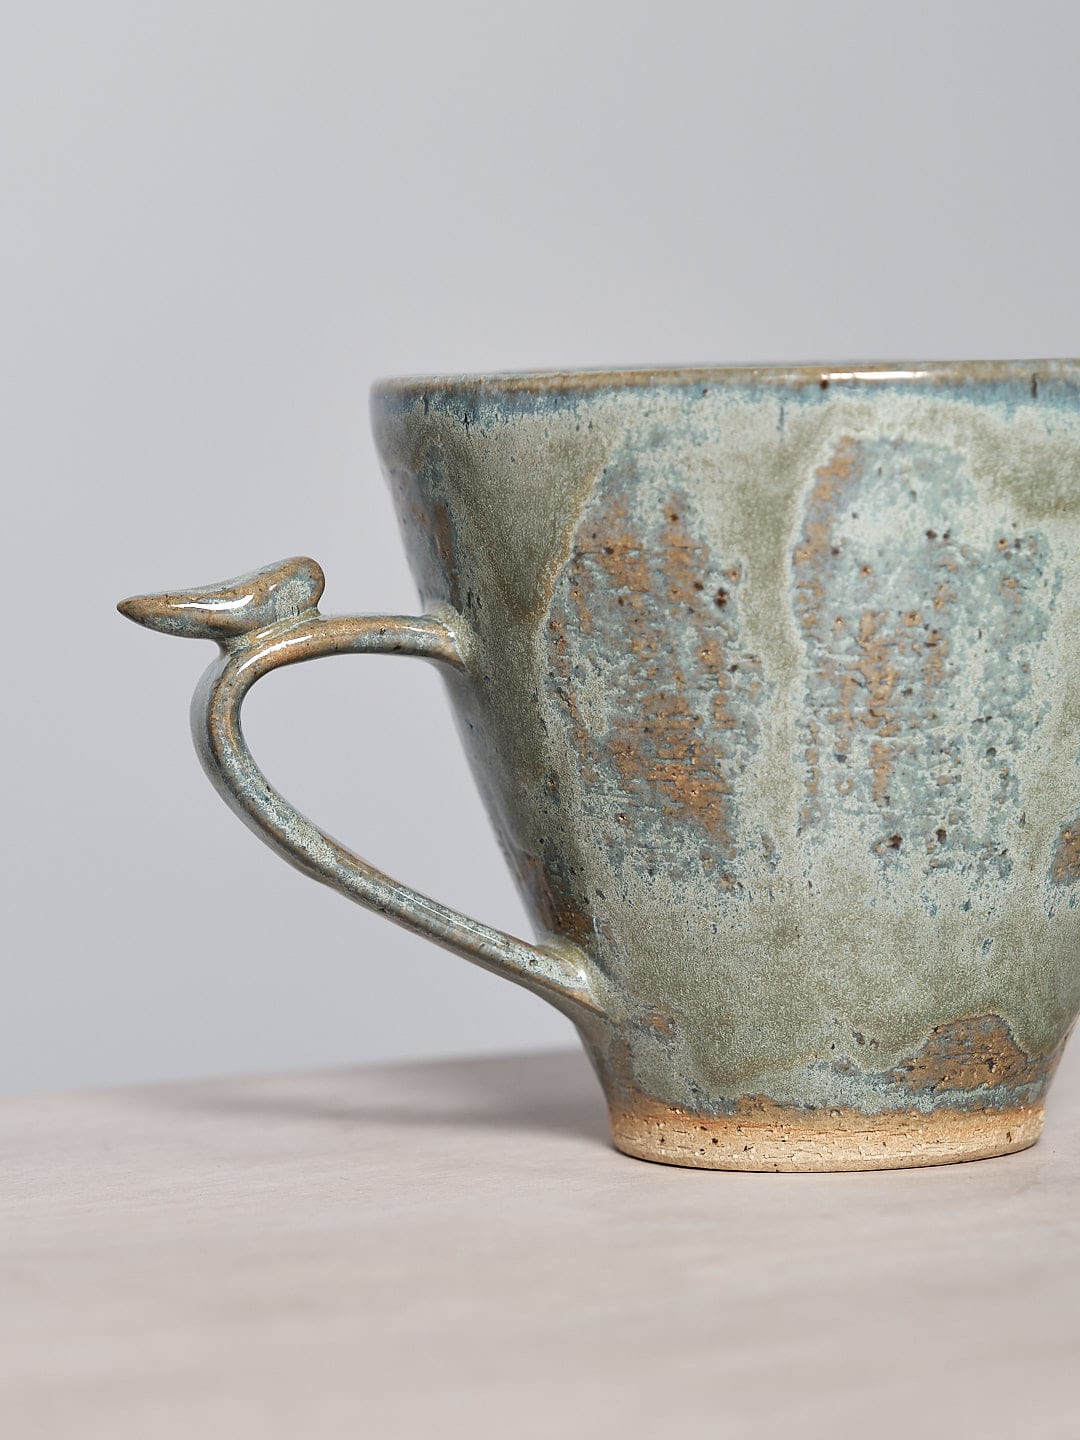 A Bird Handle Mug - Green Tea from Jino Ceramic Studio, perfect for tea-drinking, sitting on a table.